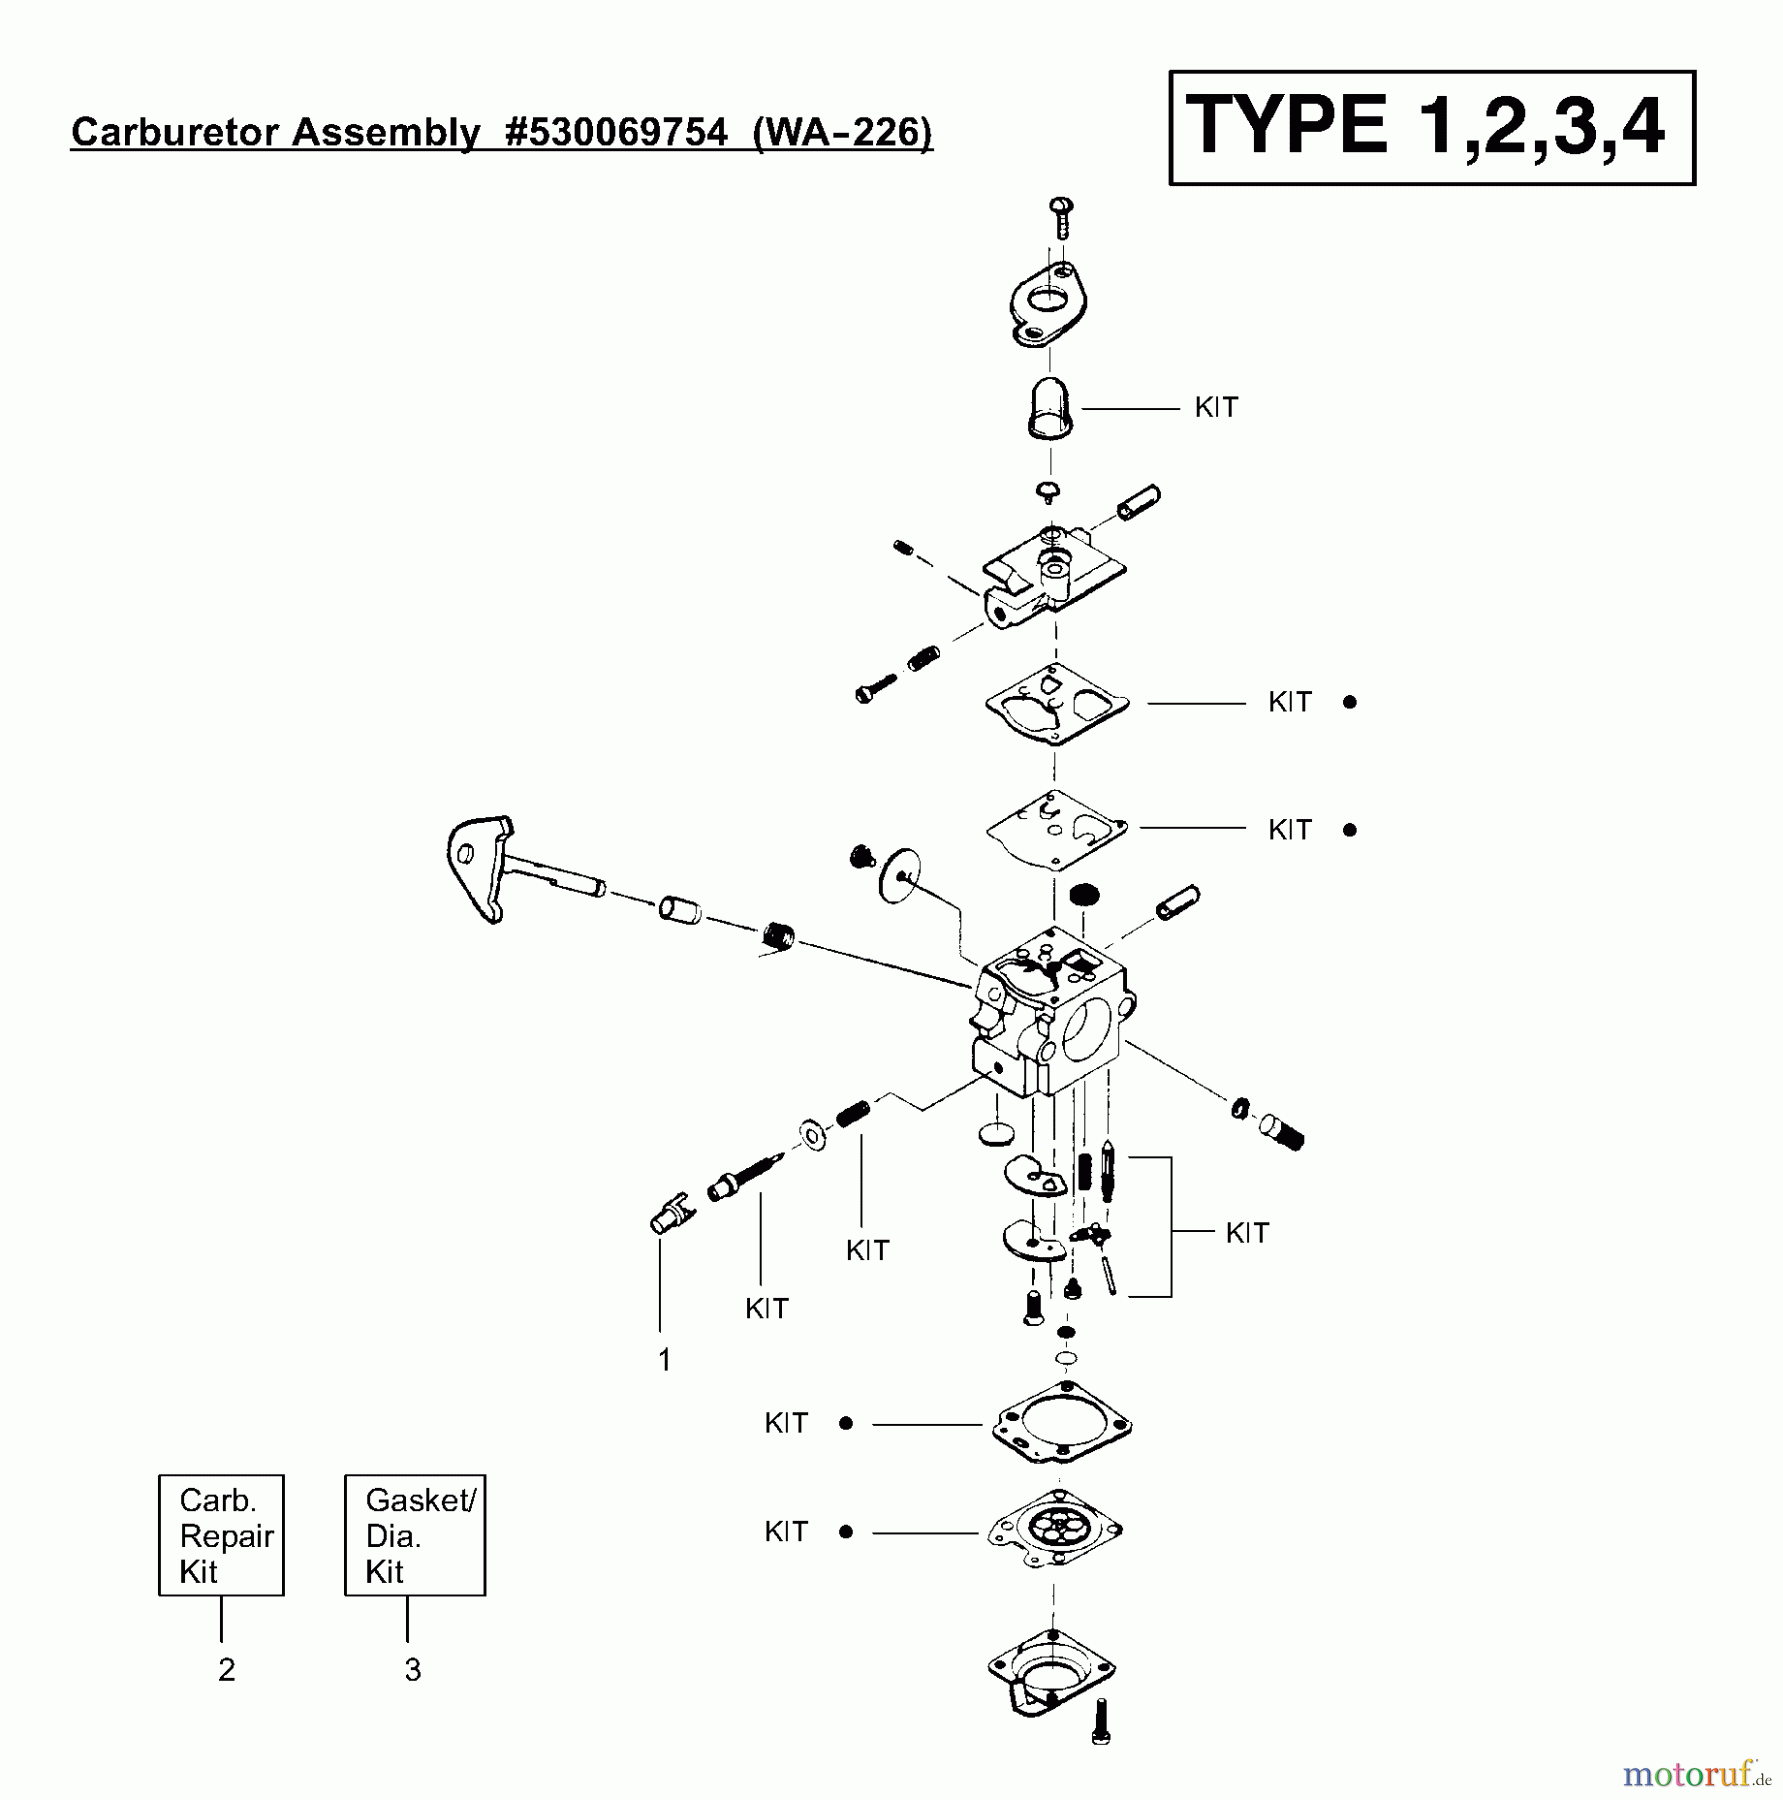  Poulan / Weed Eater Motorsensen, Trimmer TE500CXL (Type 3) - Weed Eater String Trimmer Carburetor Assembly (WA226) P/N 530069754